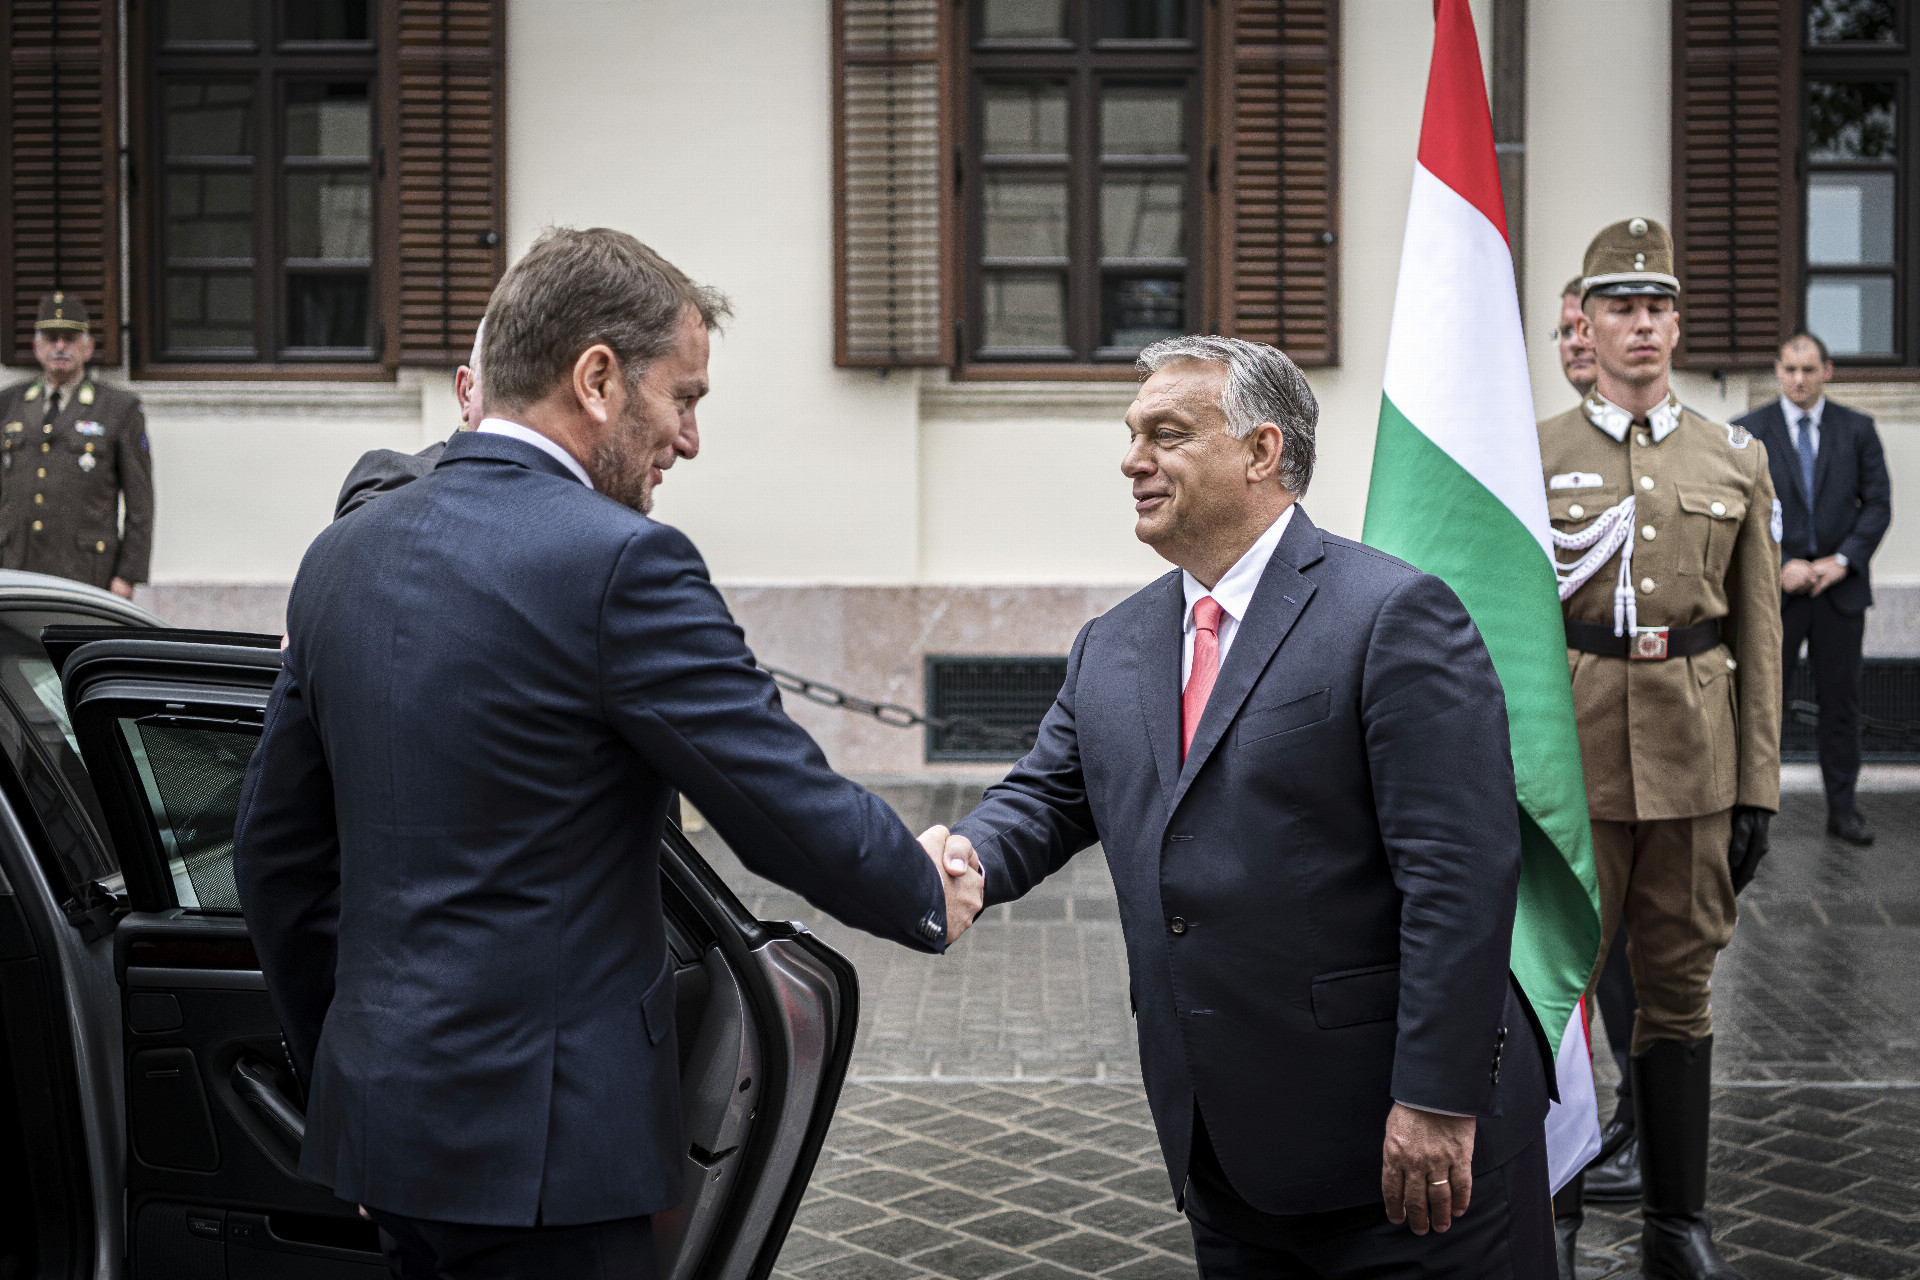  Na snímke maďarský premiér Viktor Orbán (vpravo) a slovenský premiér Igor Matovič